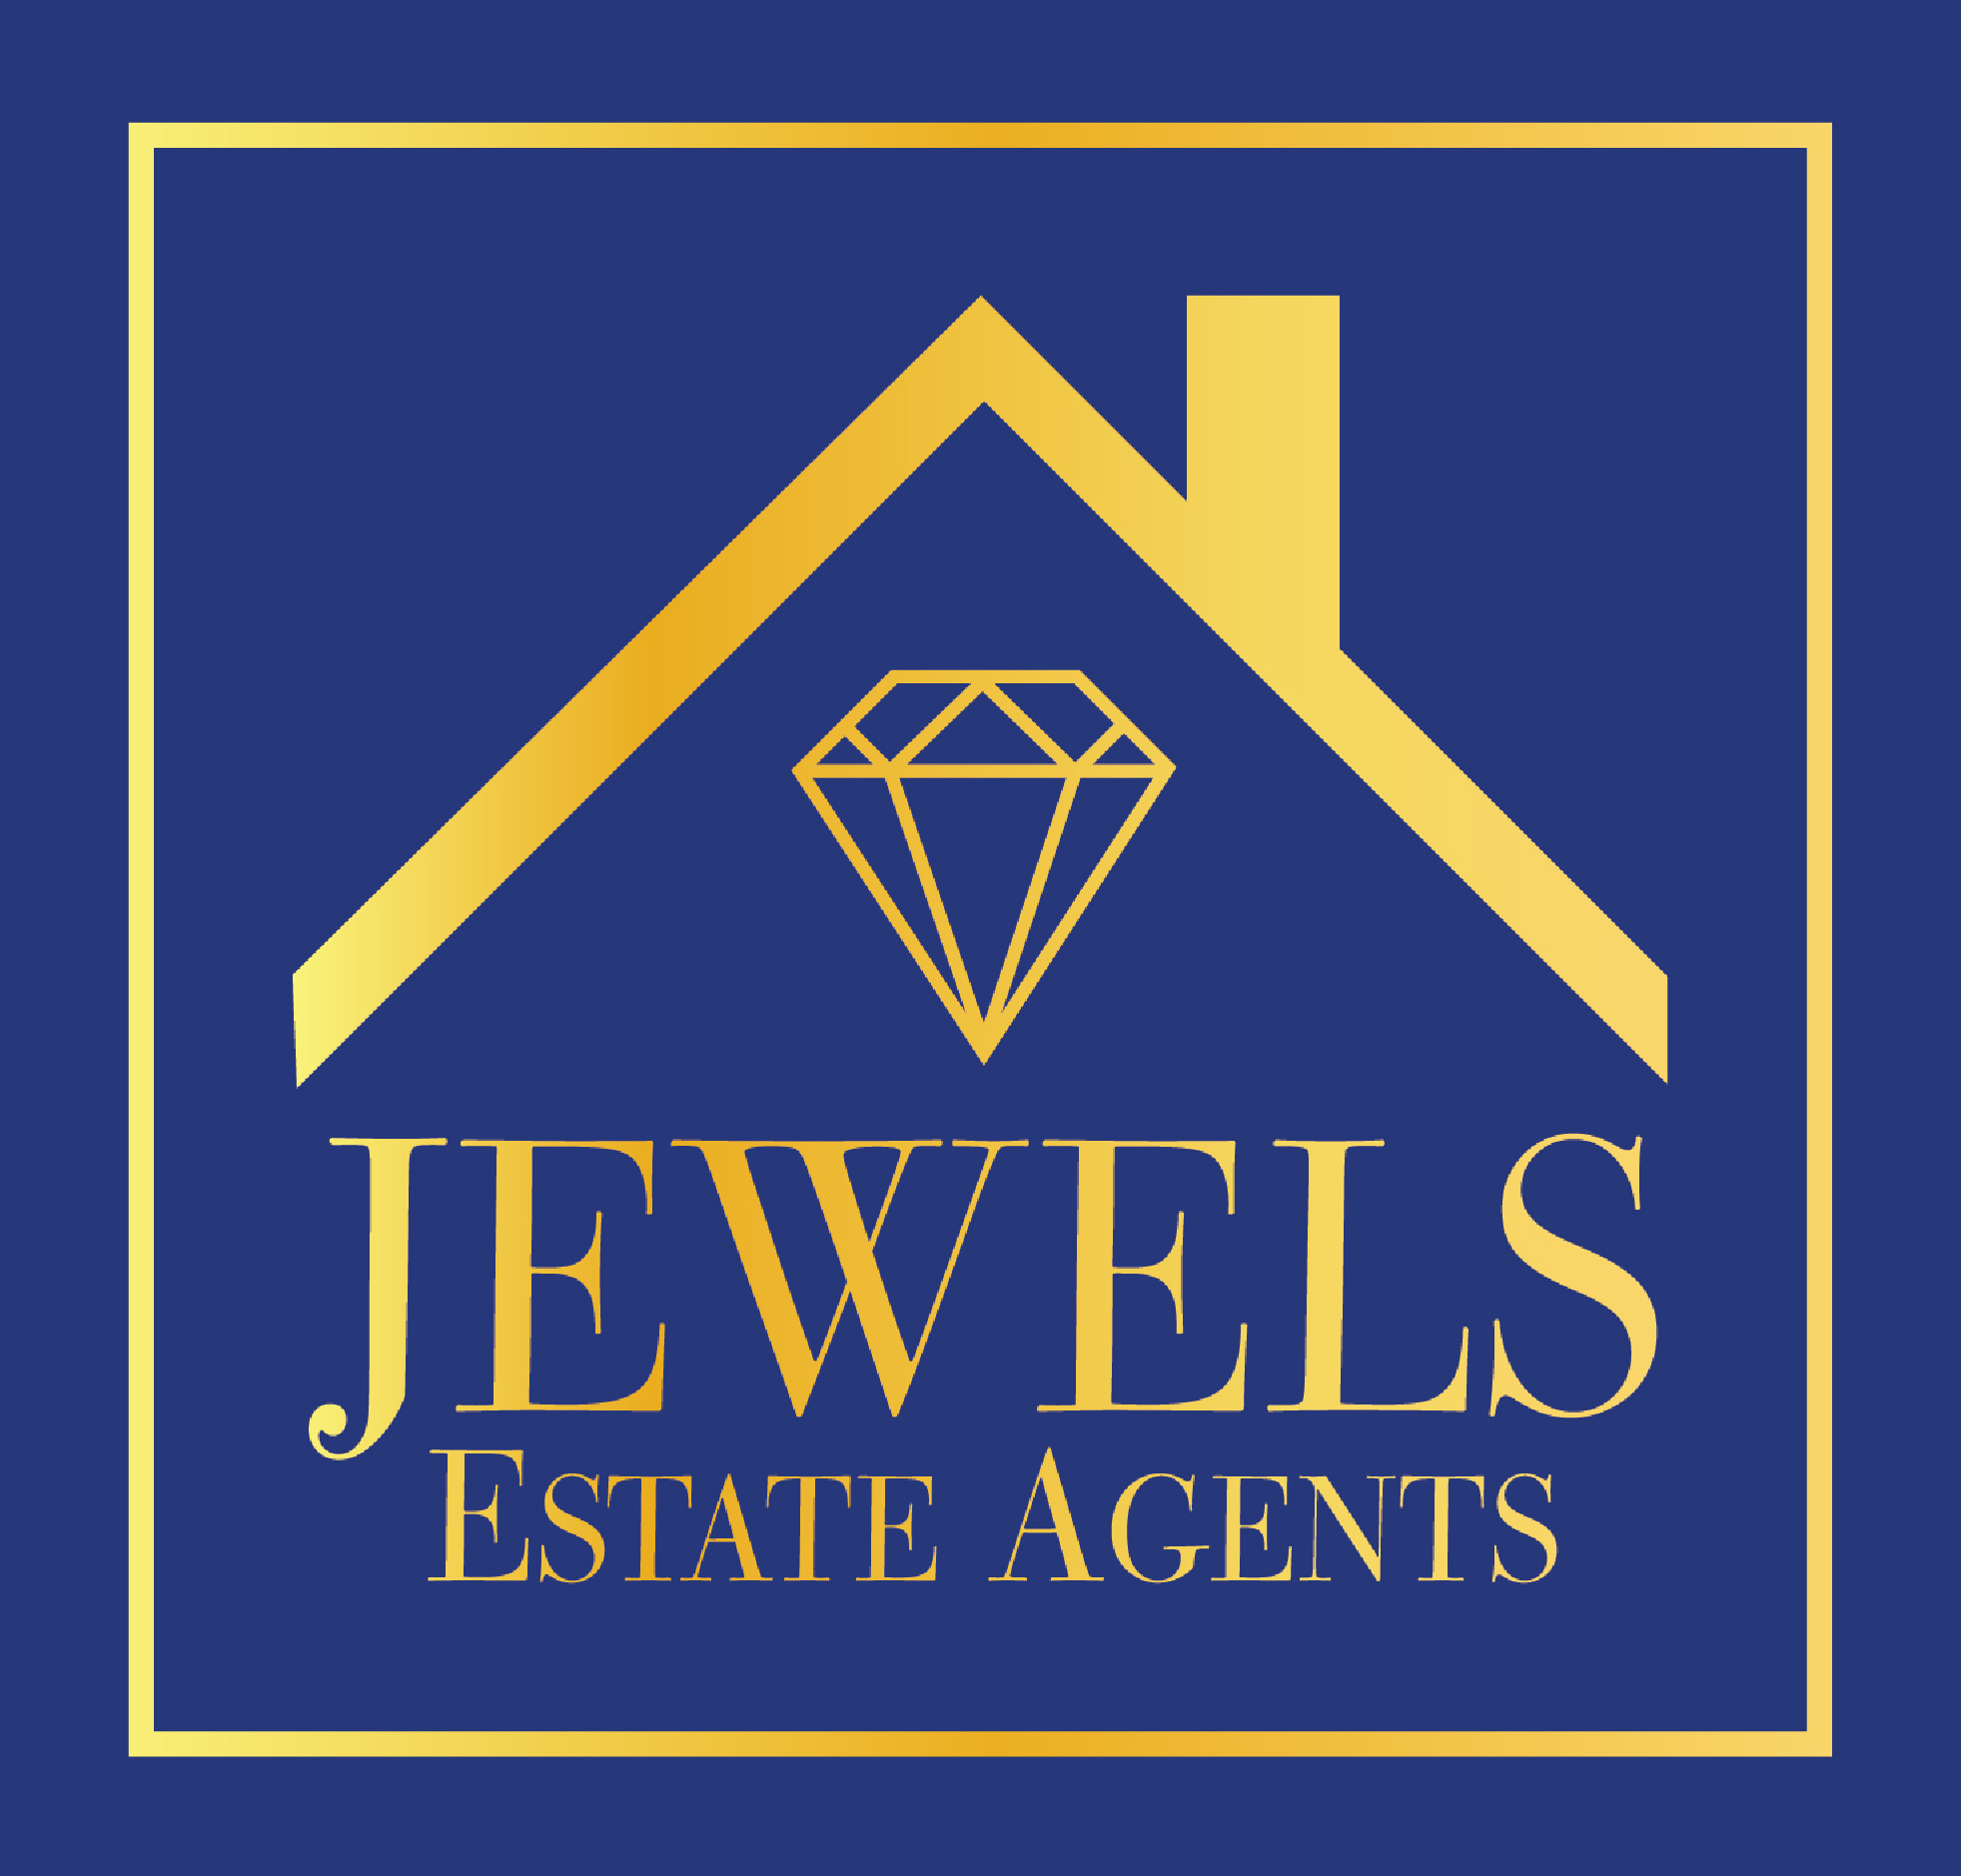 Jewels Estate Agents